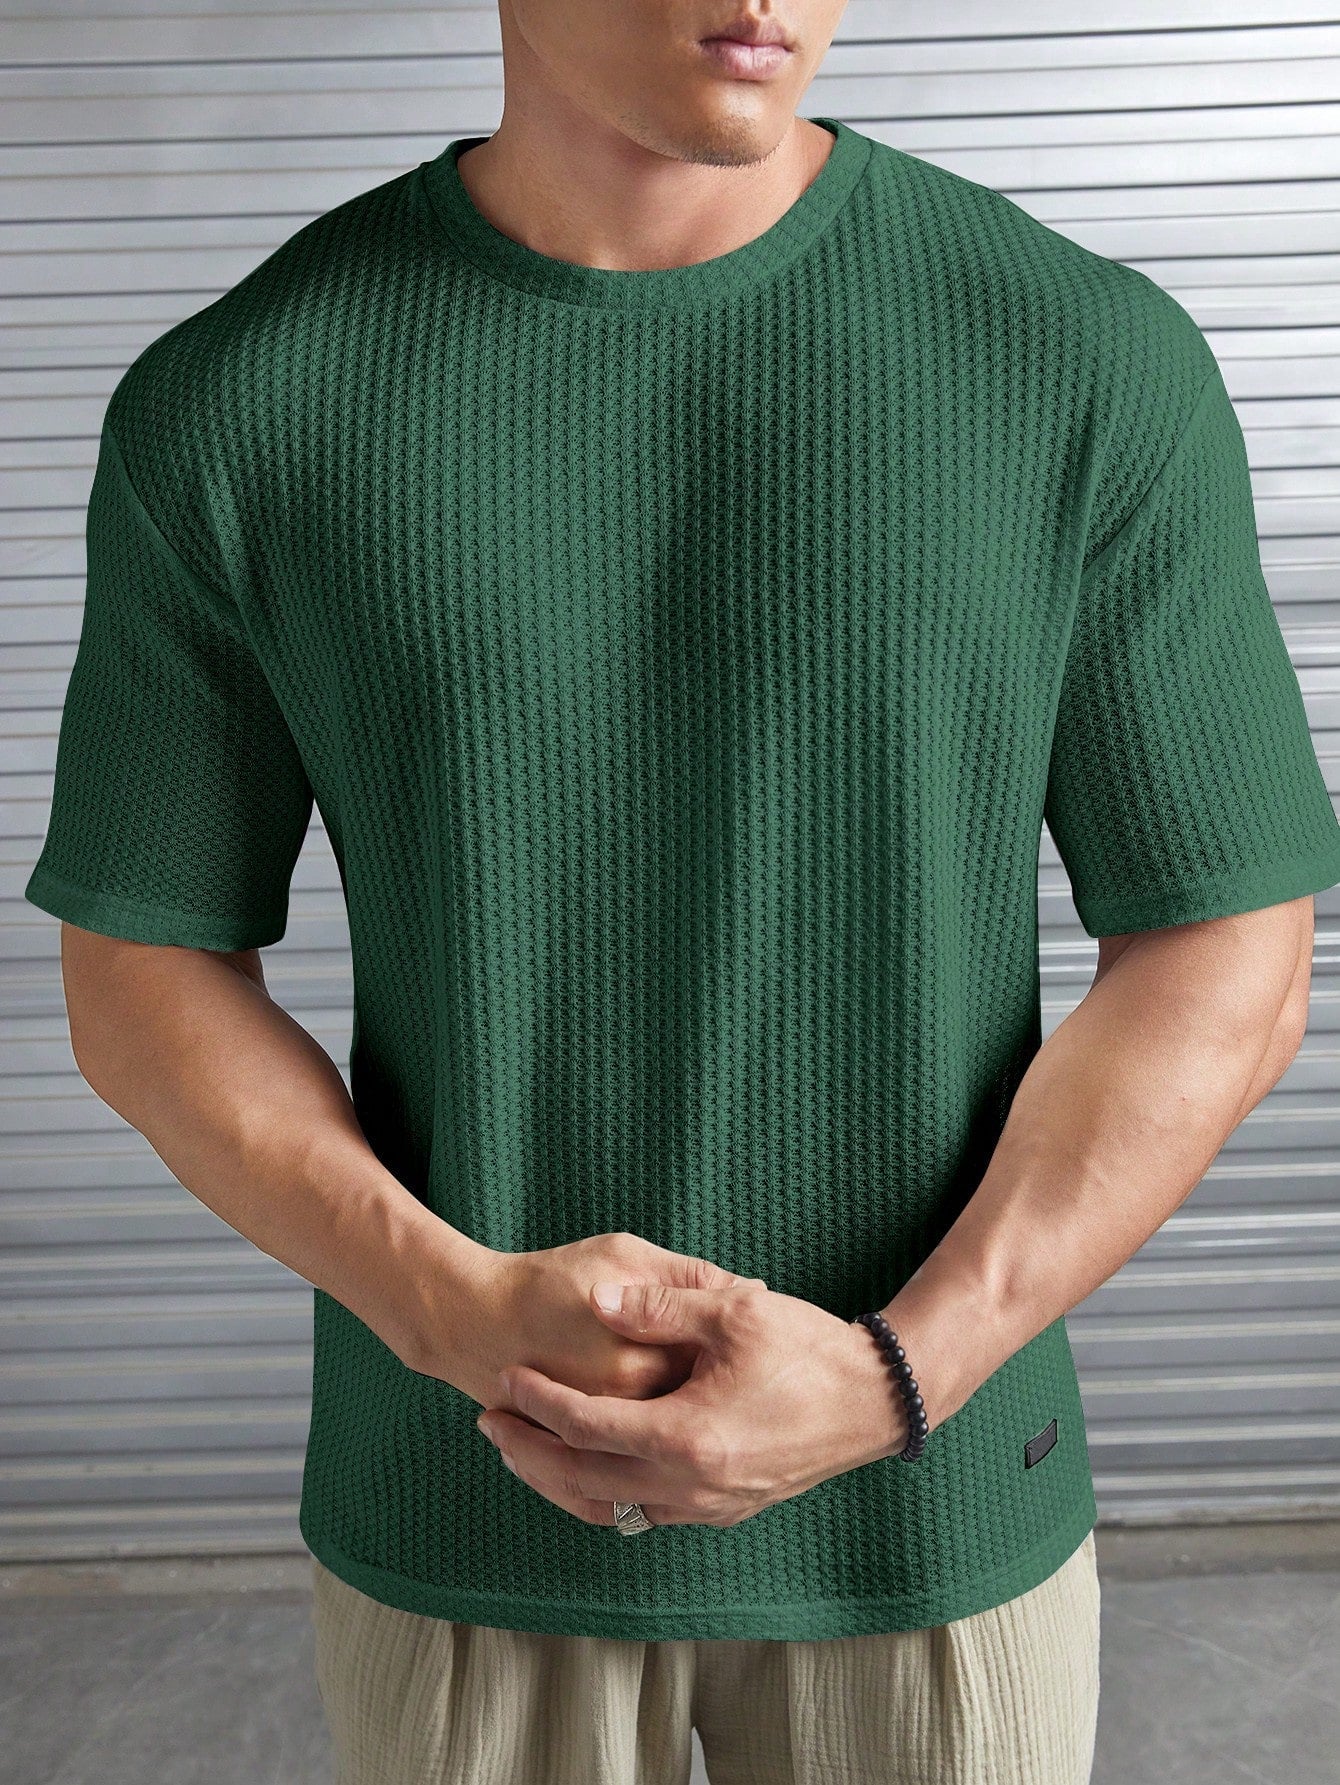 Nextthink Men's Solid Color Waffle-Knit Tee - NextthinkShopsm2303280205061553